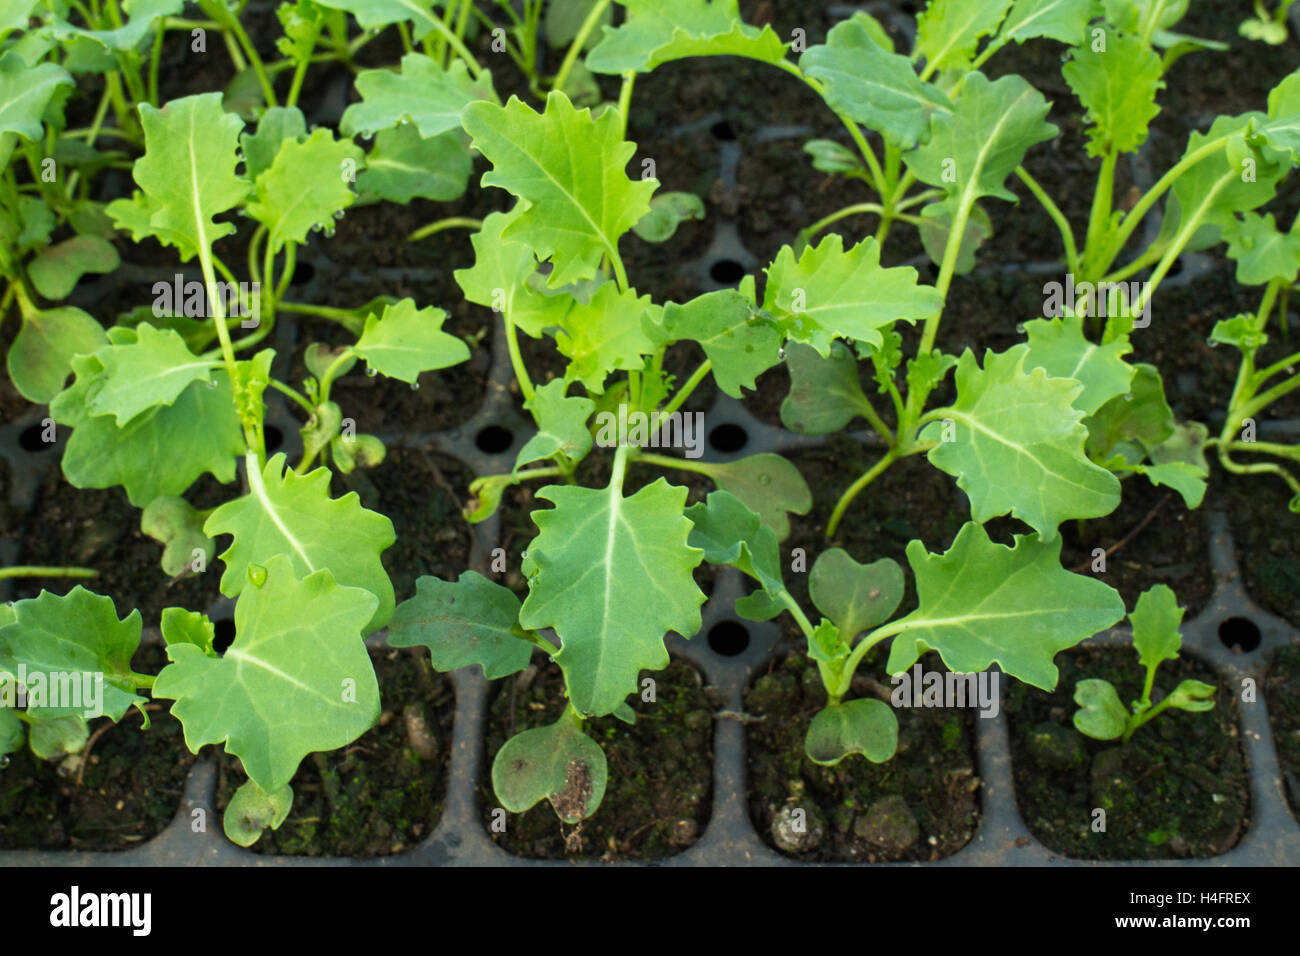 Green kale transplant plants, farm inspired Stock Photo